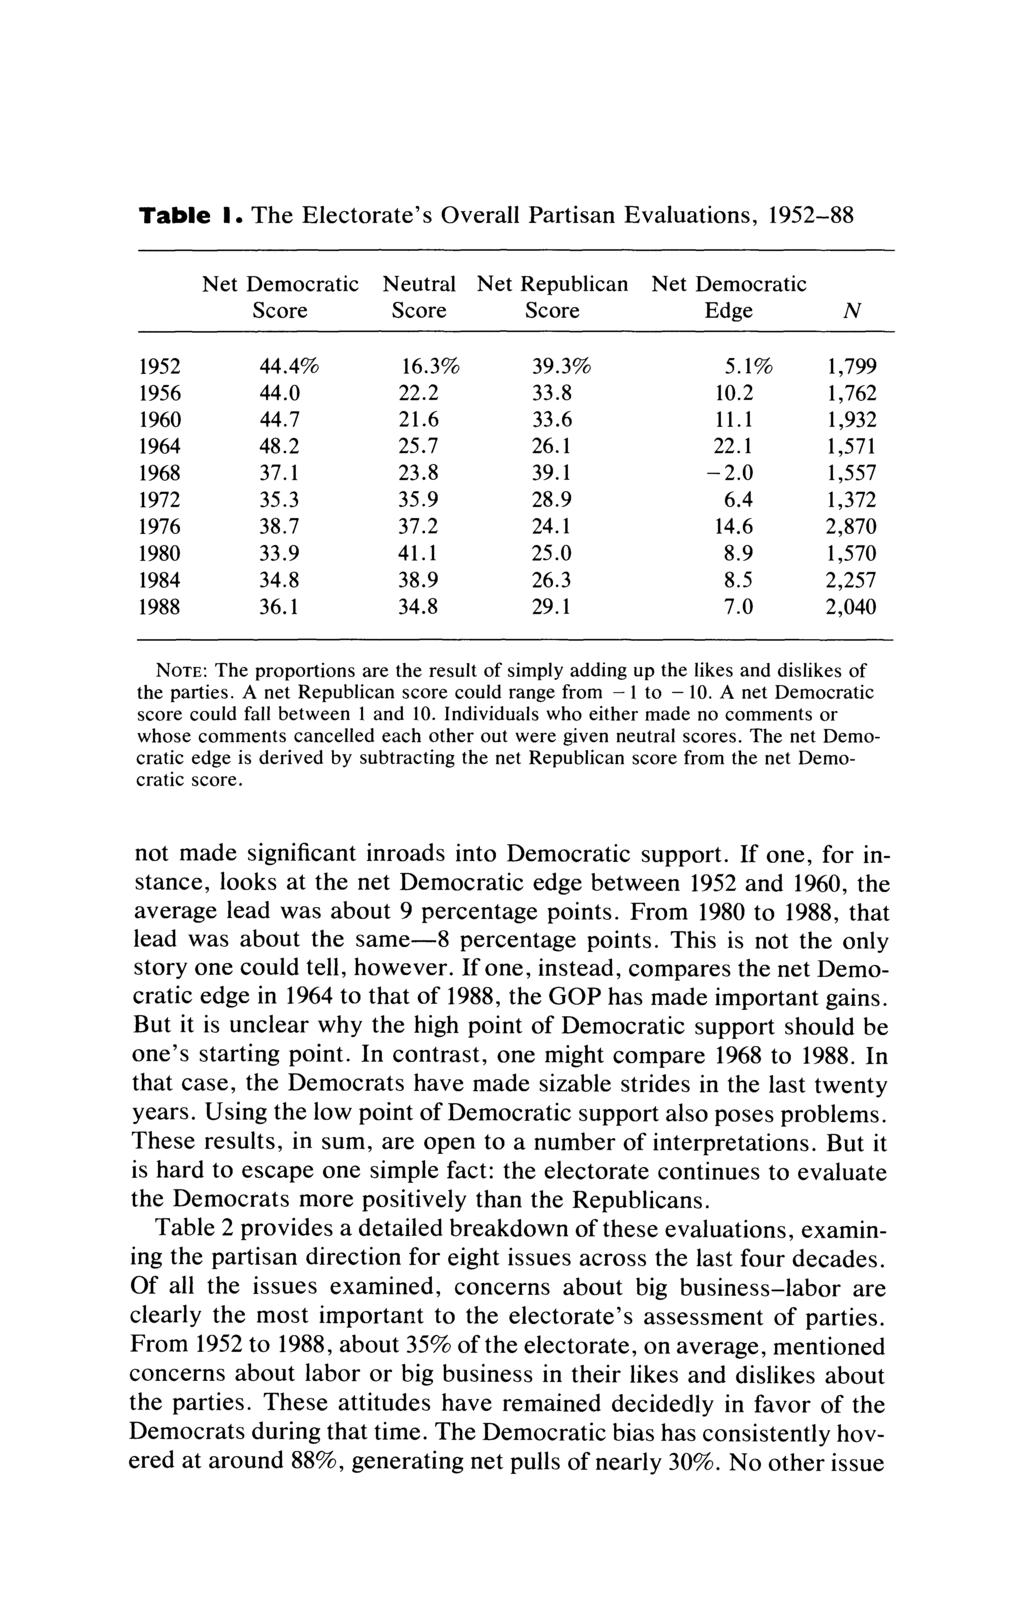 The Electorate's Partisan Evaluations 223 Table 1. The Electorate's Overall Partisan Evaluations, 1952-88 Net Democratic Neutral Net Republican Net Democratic Score Score Score Edge N 1952 44.4% 16.